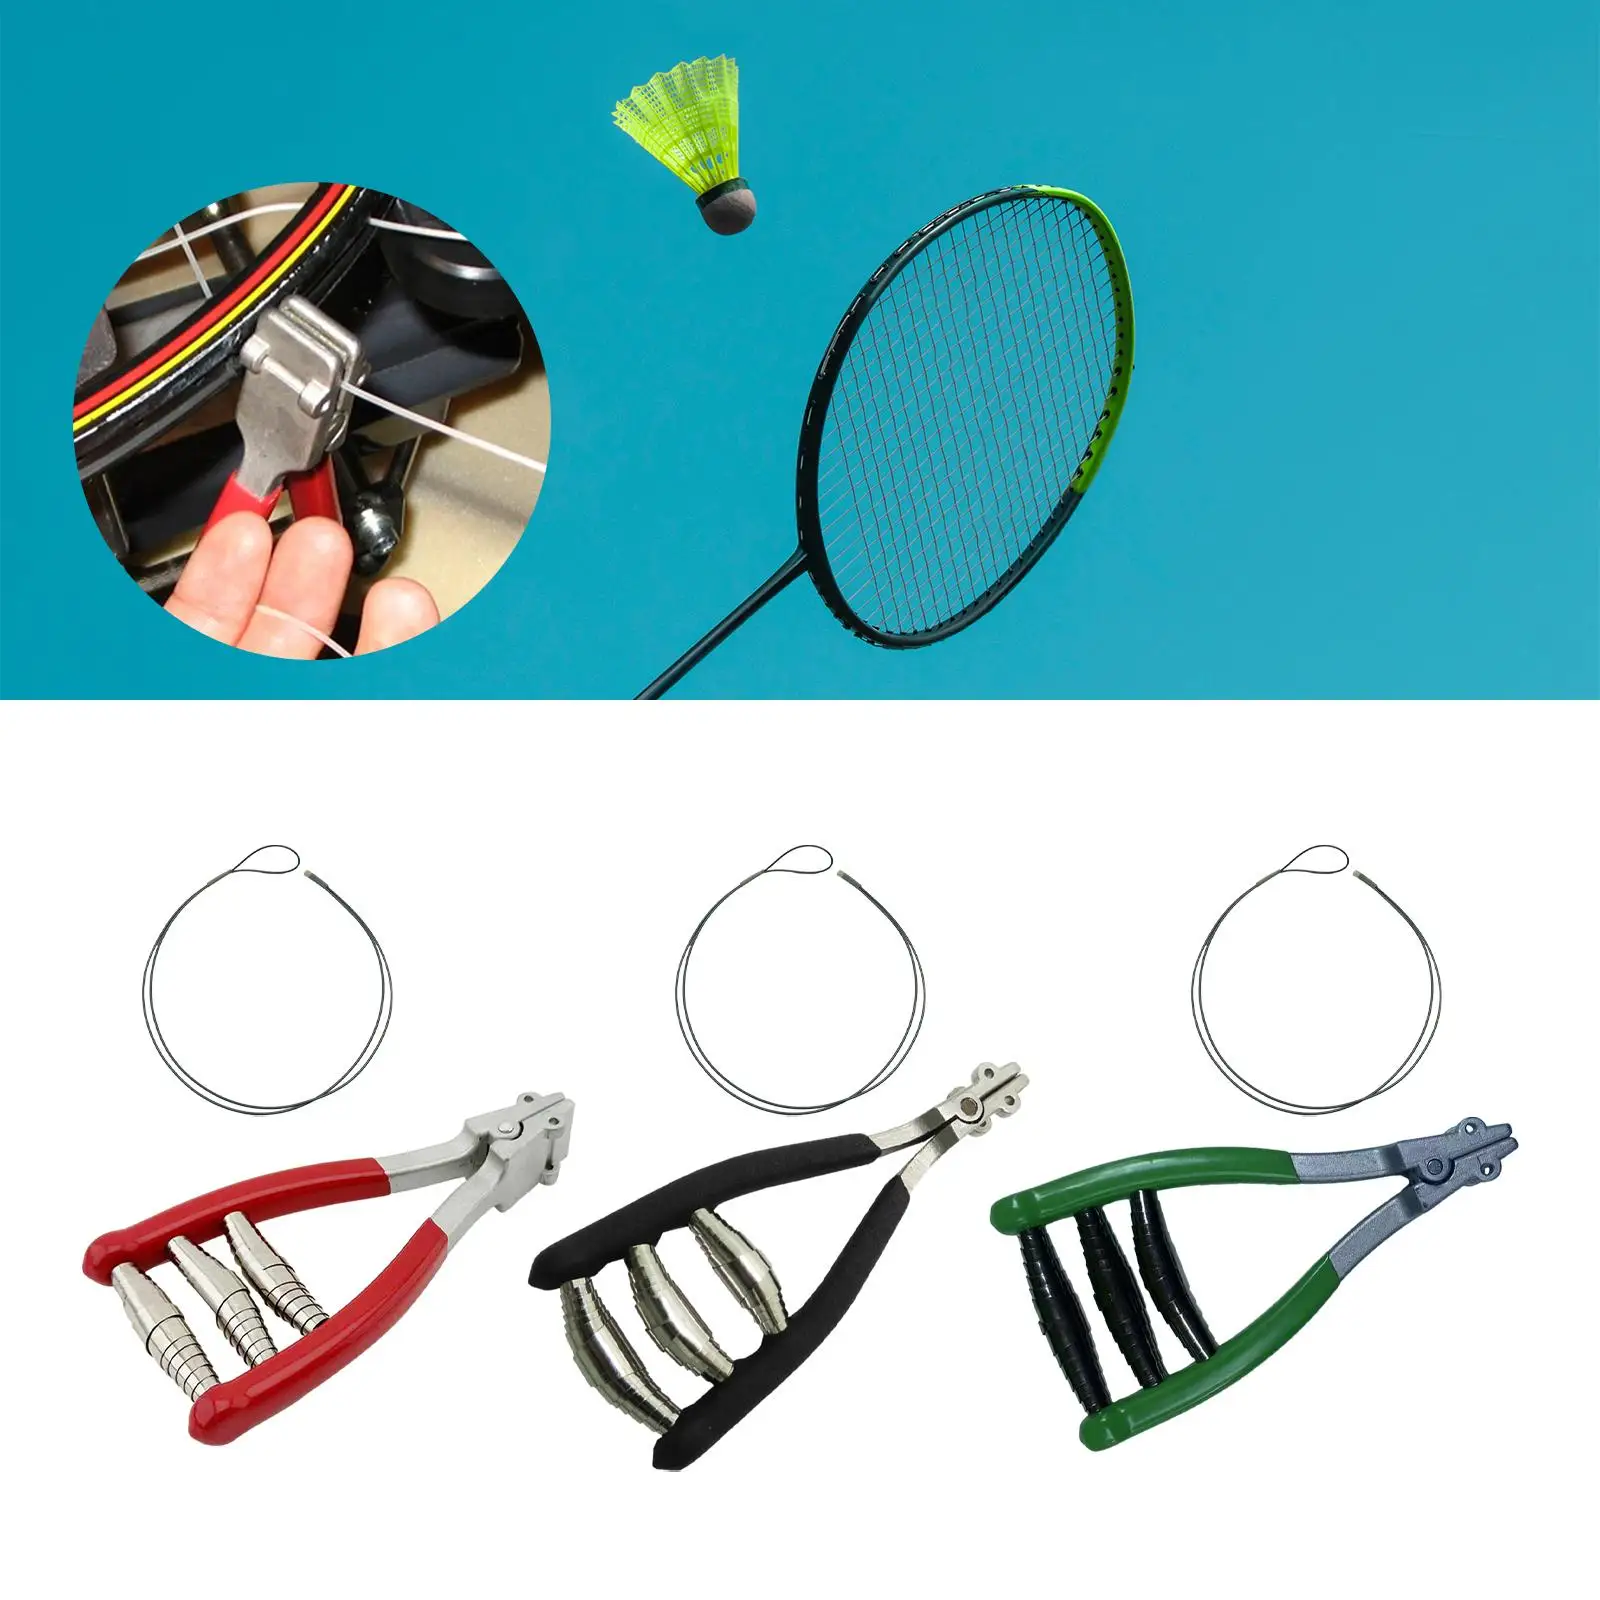 String Starting Clamp Stringing Clamp for Squash Tennis Badminton Racket